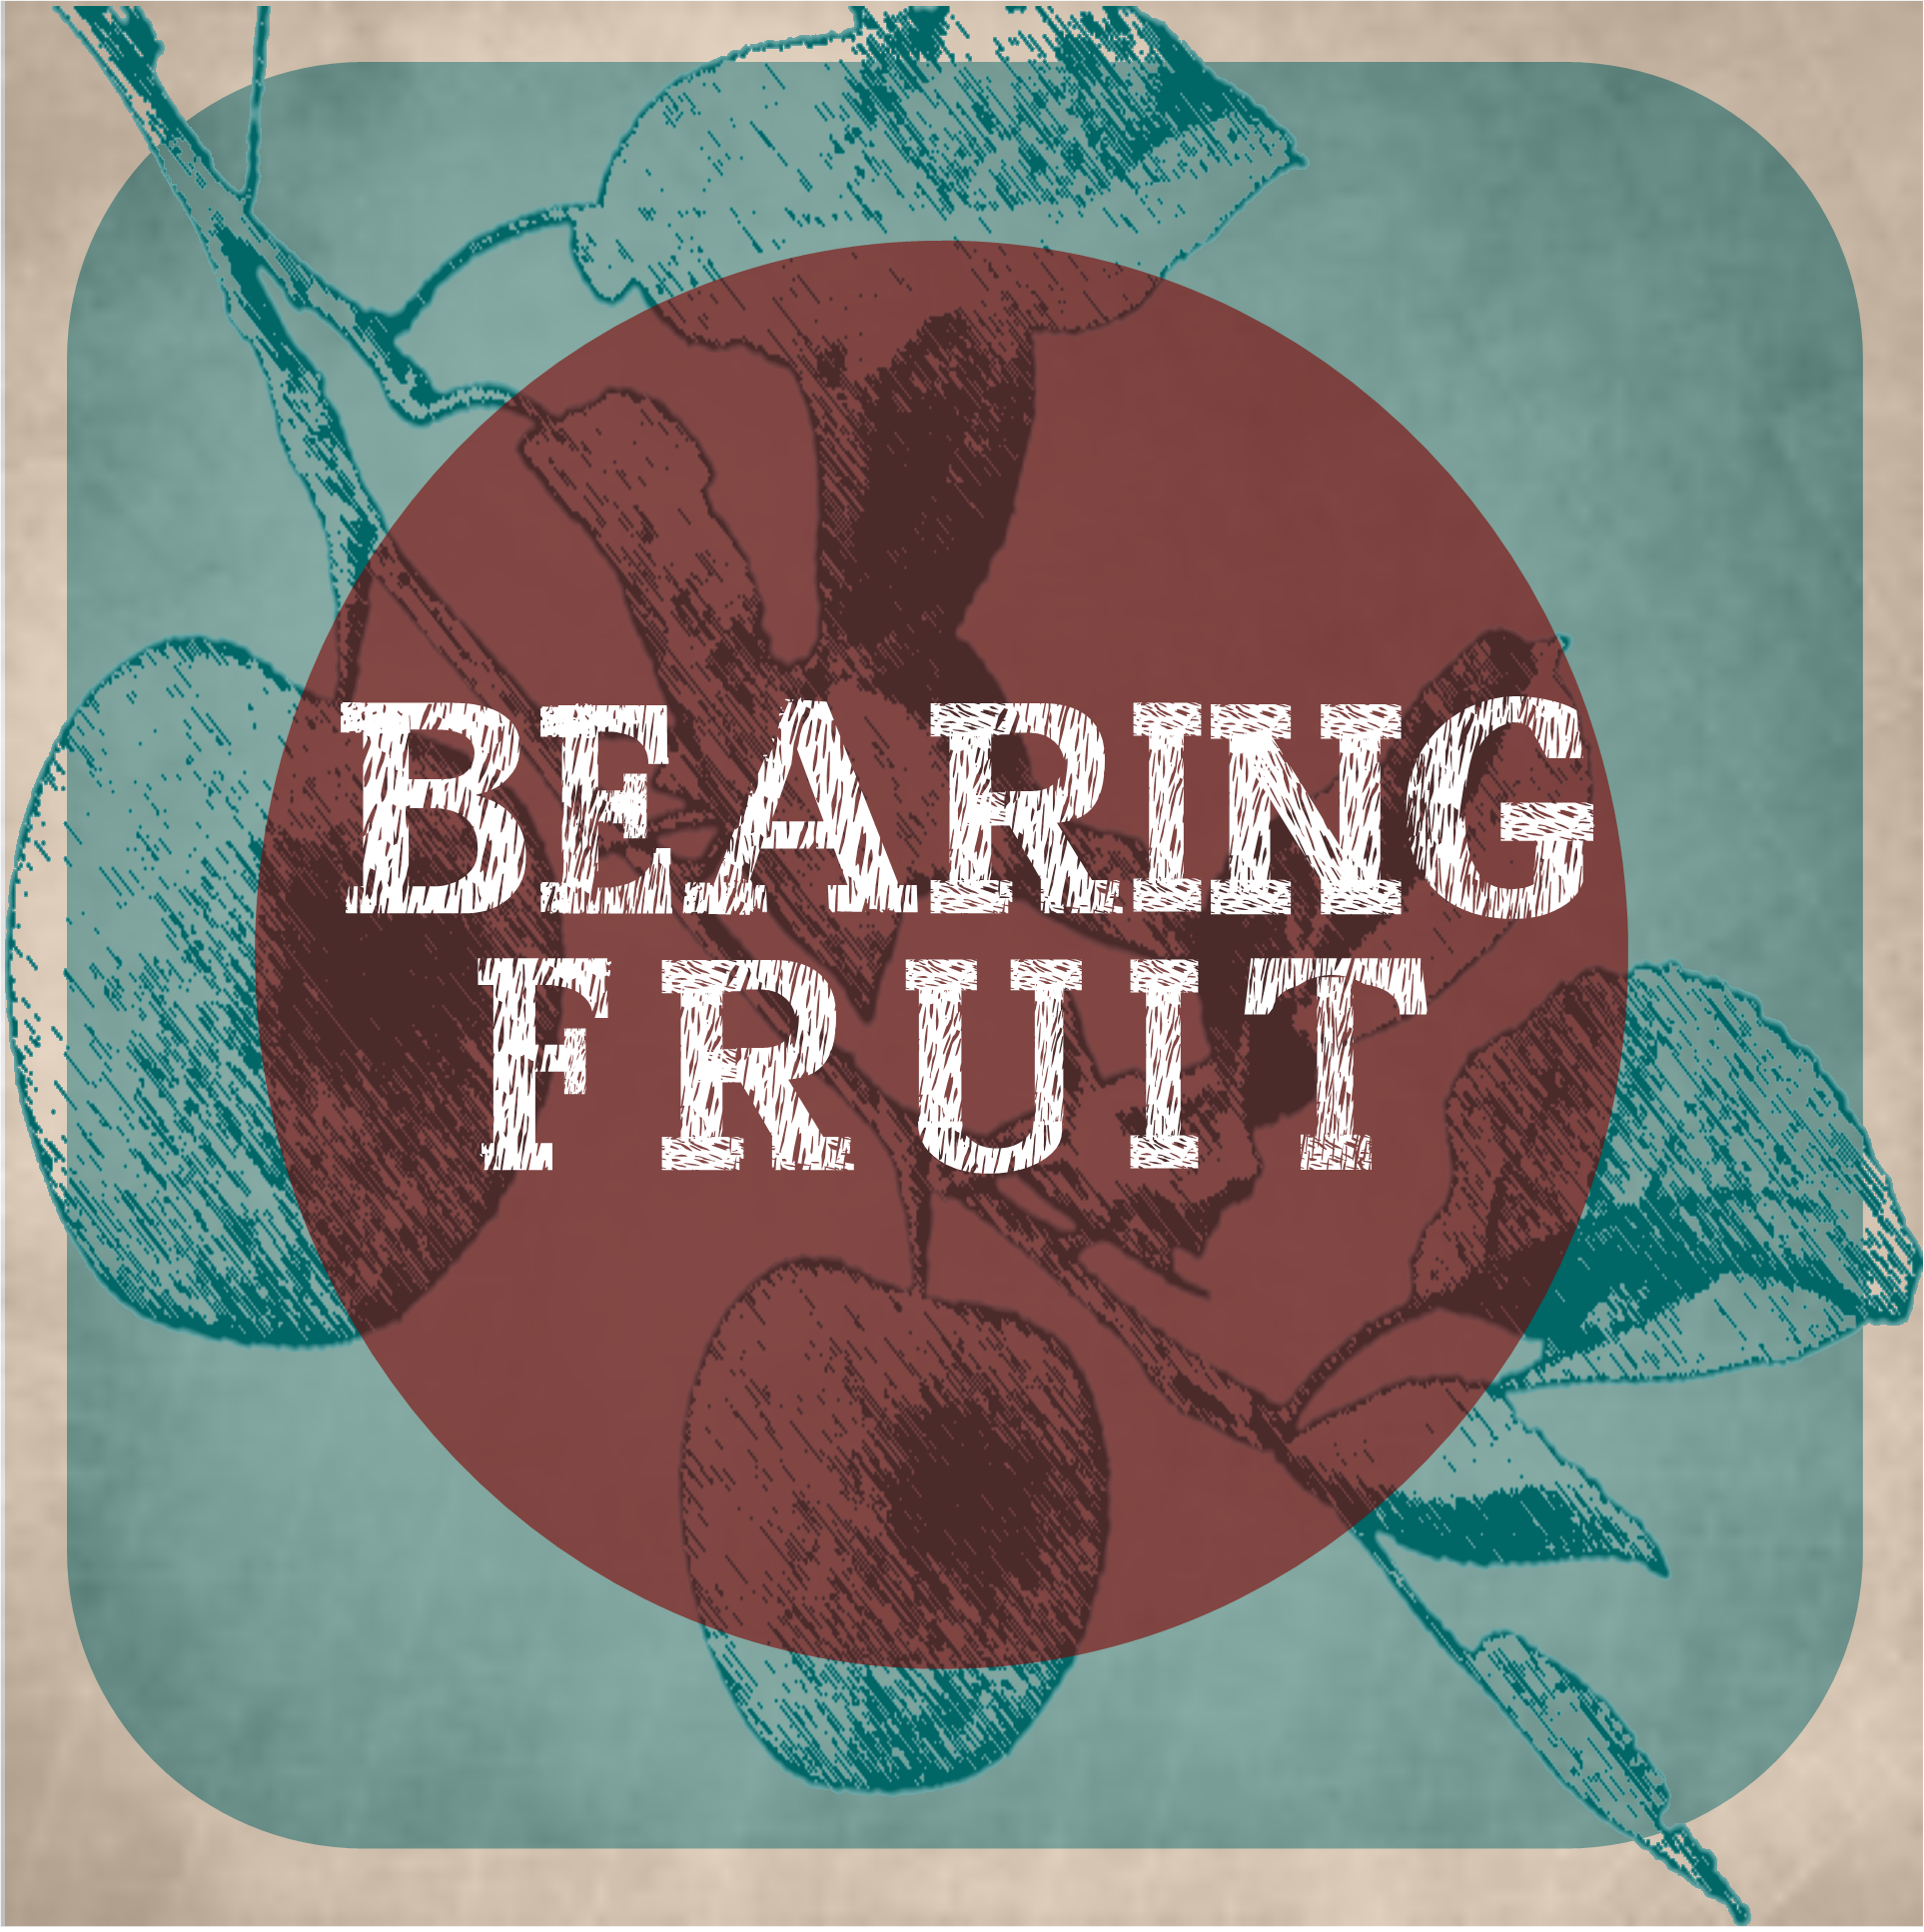 Bearing Fruit for web.jpg.png